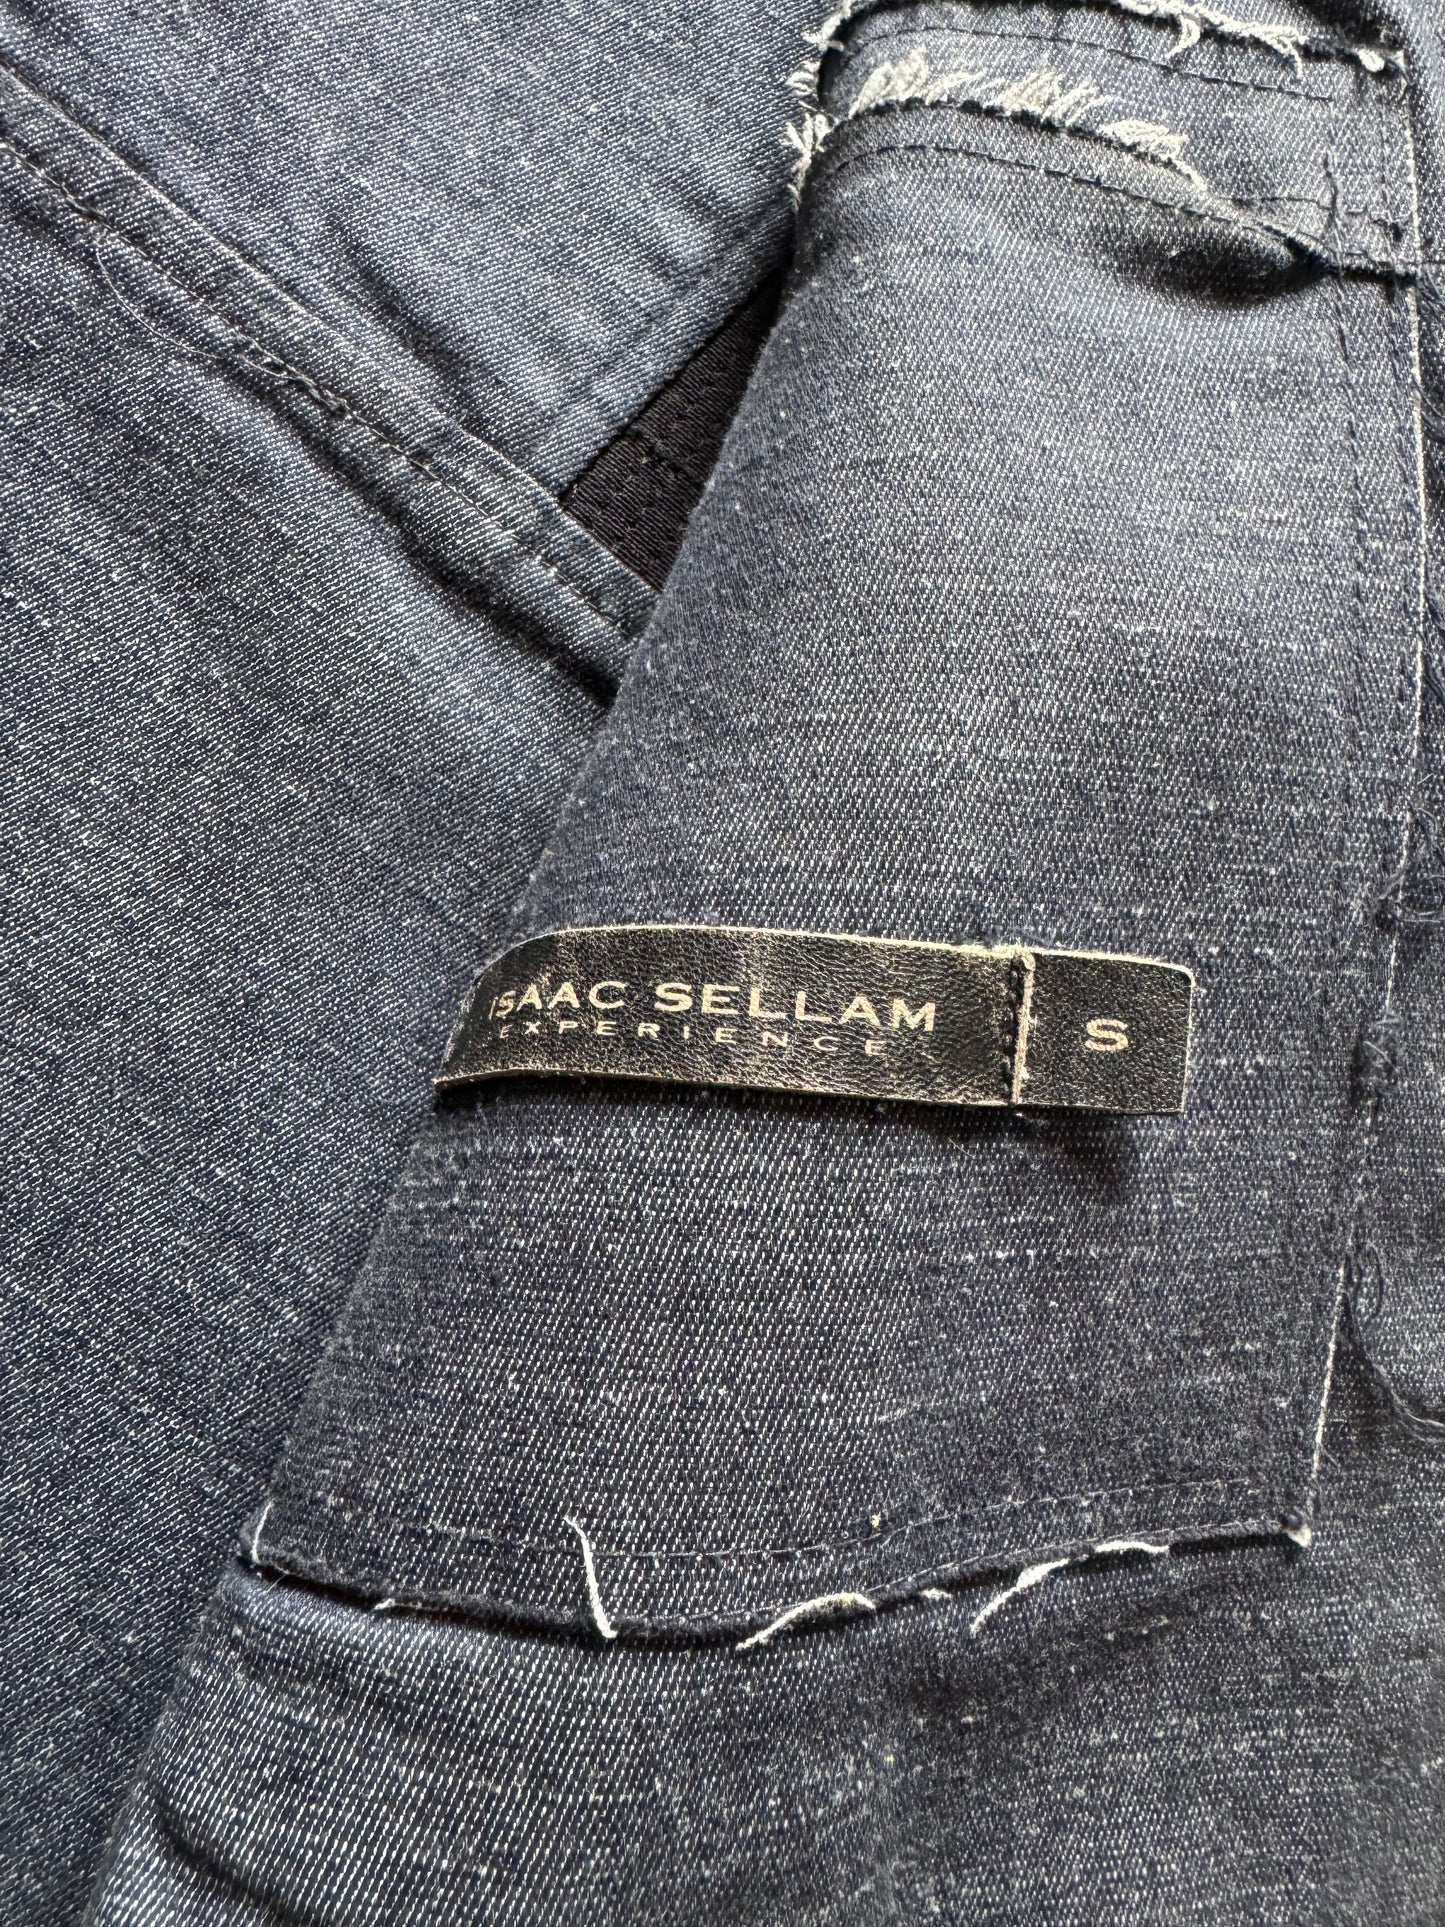 Isaac Sellam Experience Artisanal Black Jacket (S) - 4